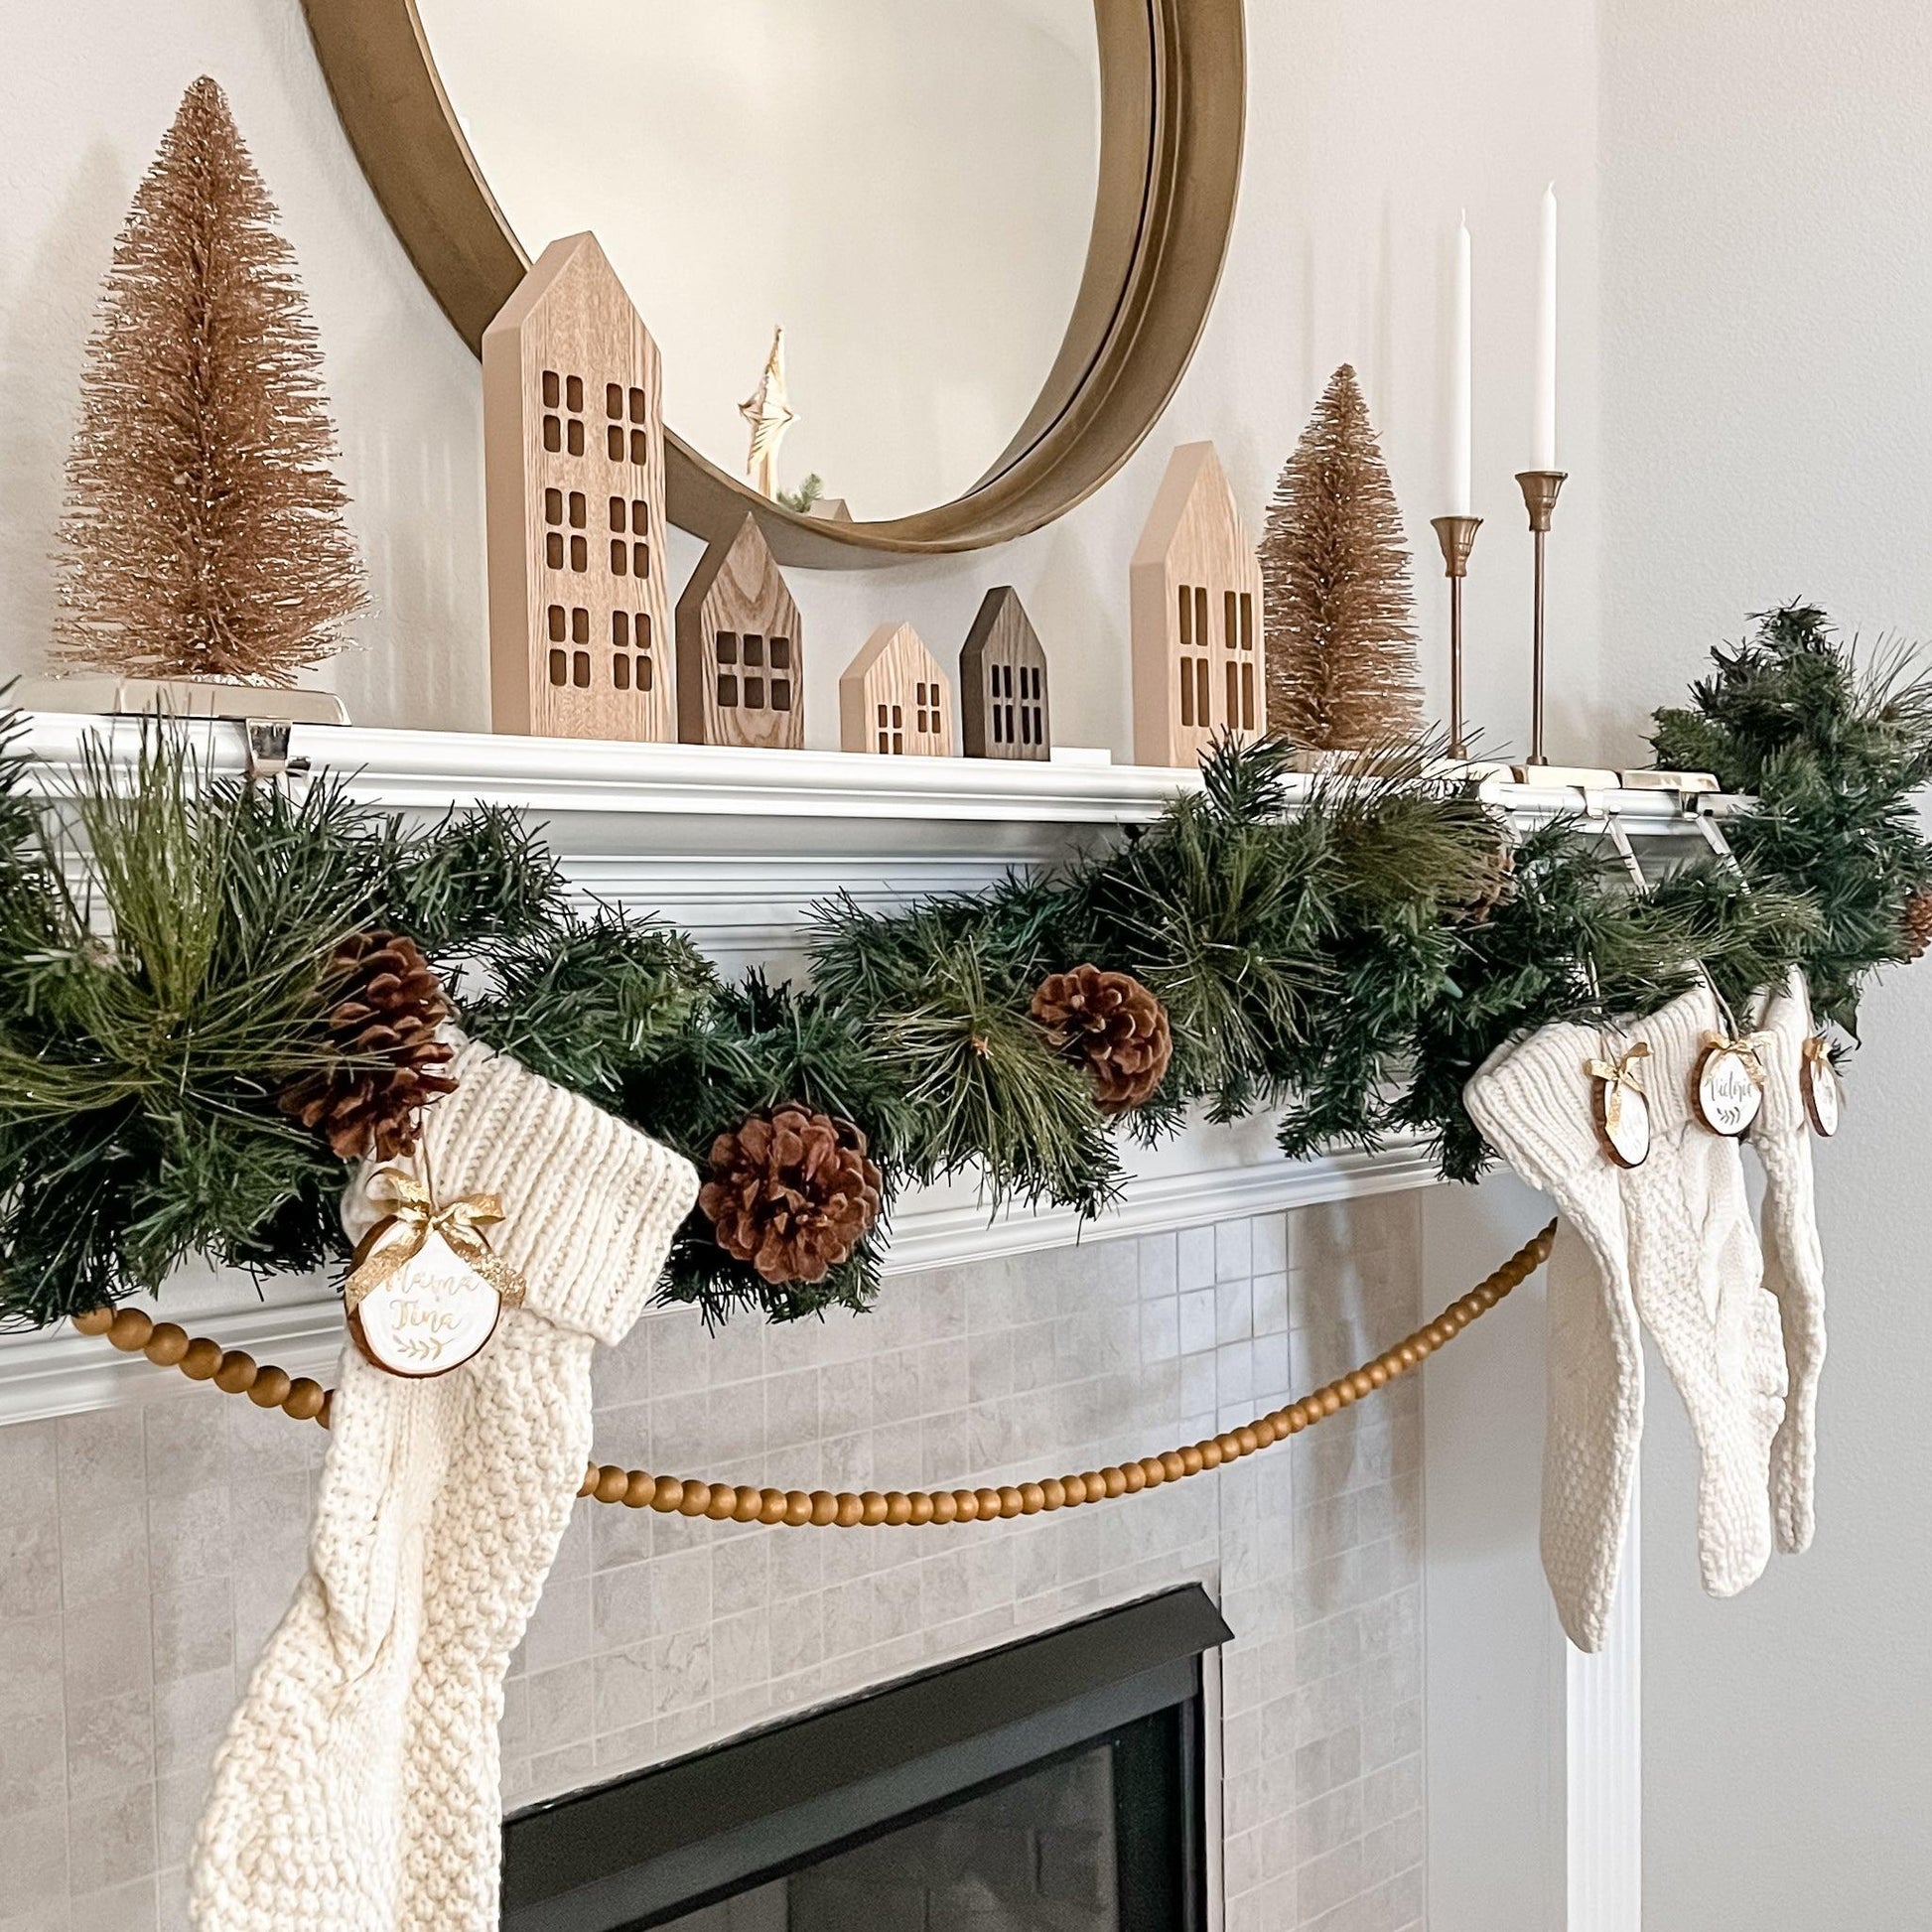 Christmas tree garland, Mantel garland, decorative wooden bead garland